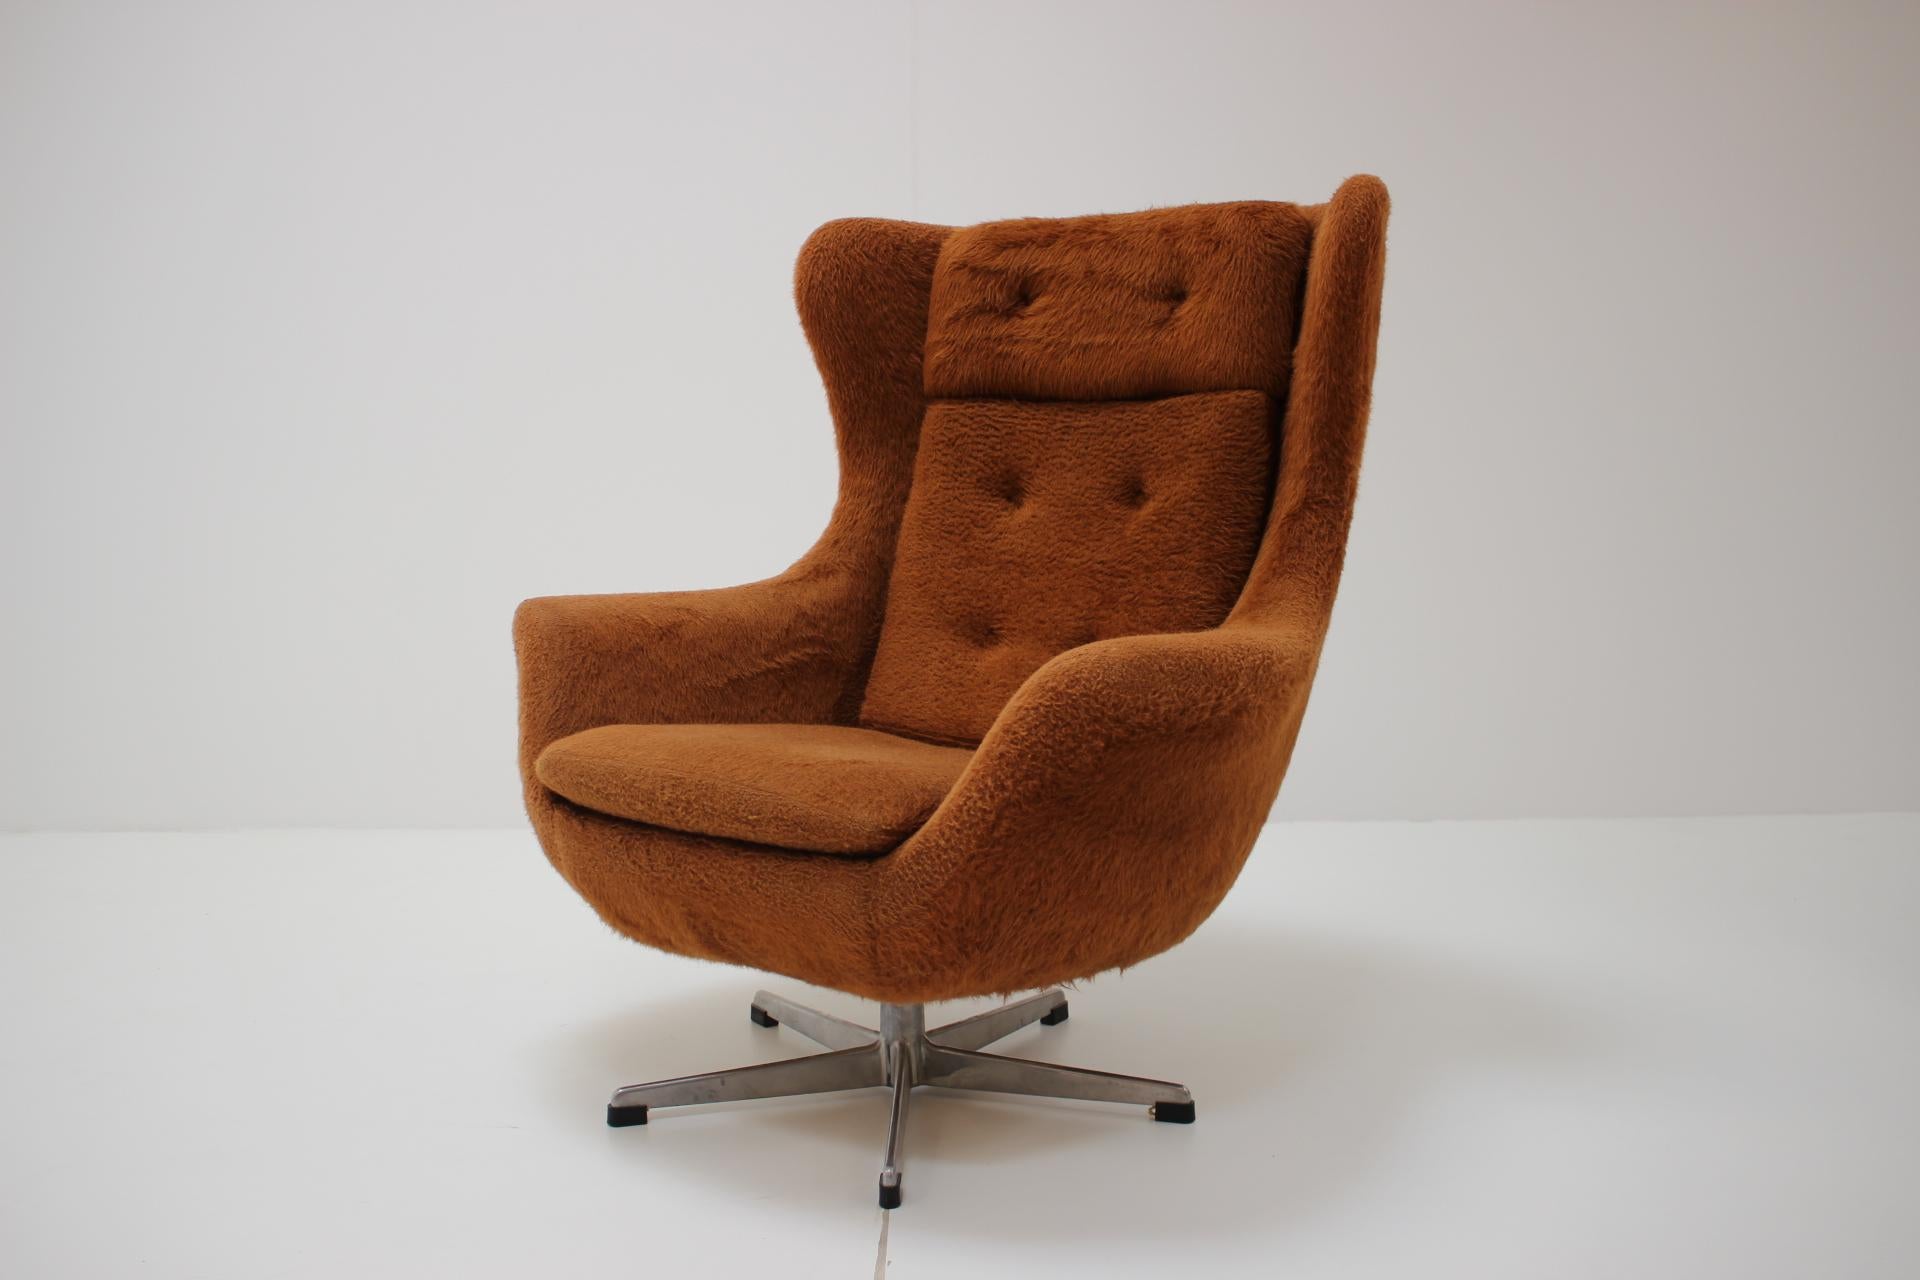 - Made in Czechoslovakia
- Made of metal, fabric
- Original upholstrey
- Very comfortable
- Good, original condition.